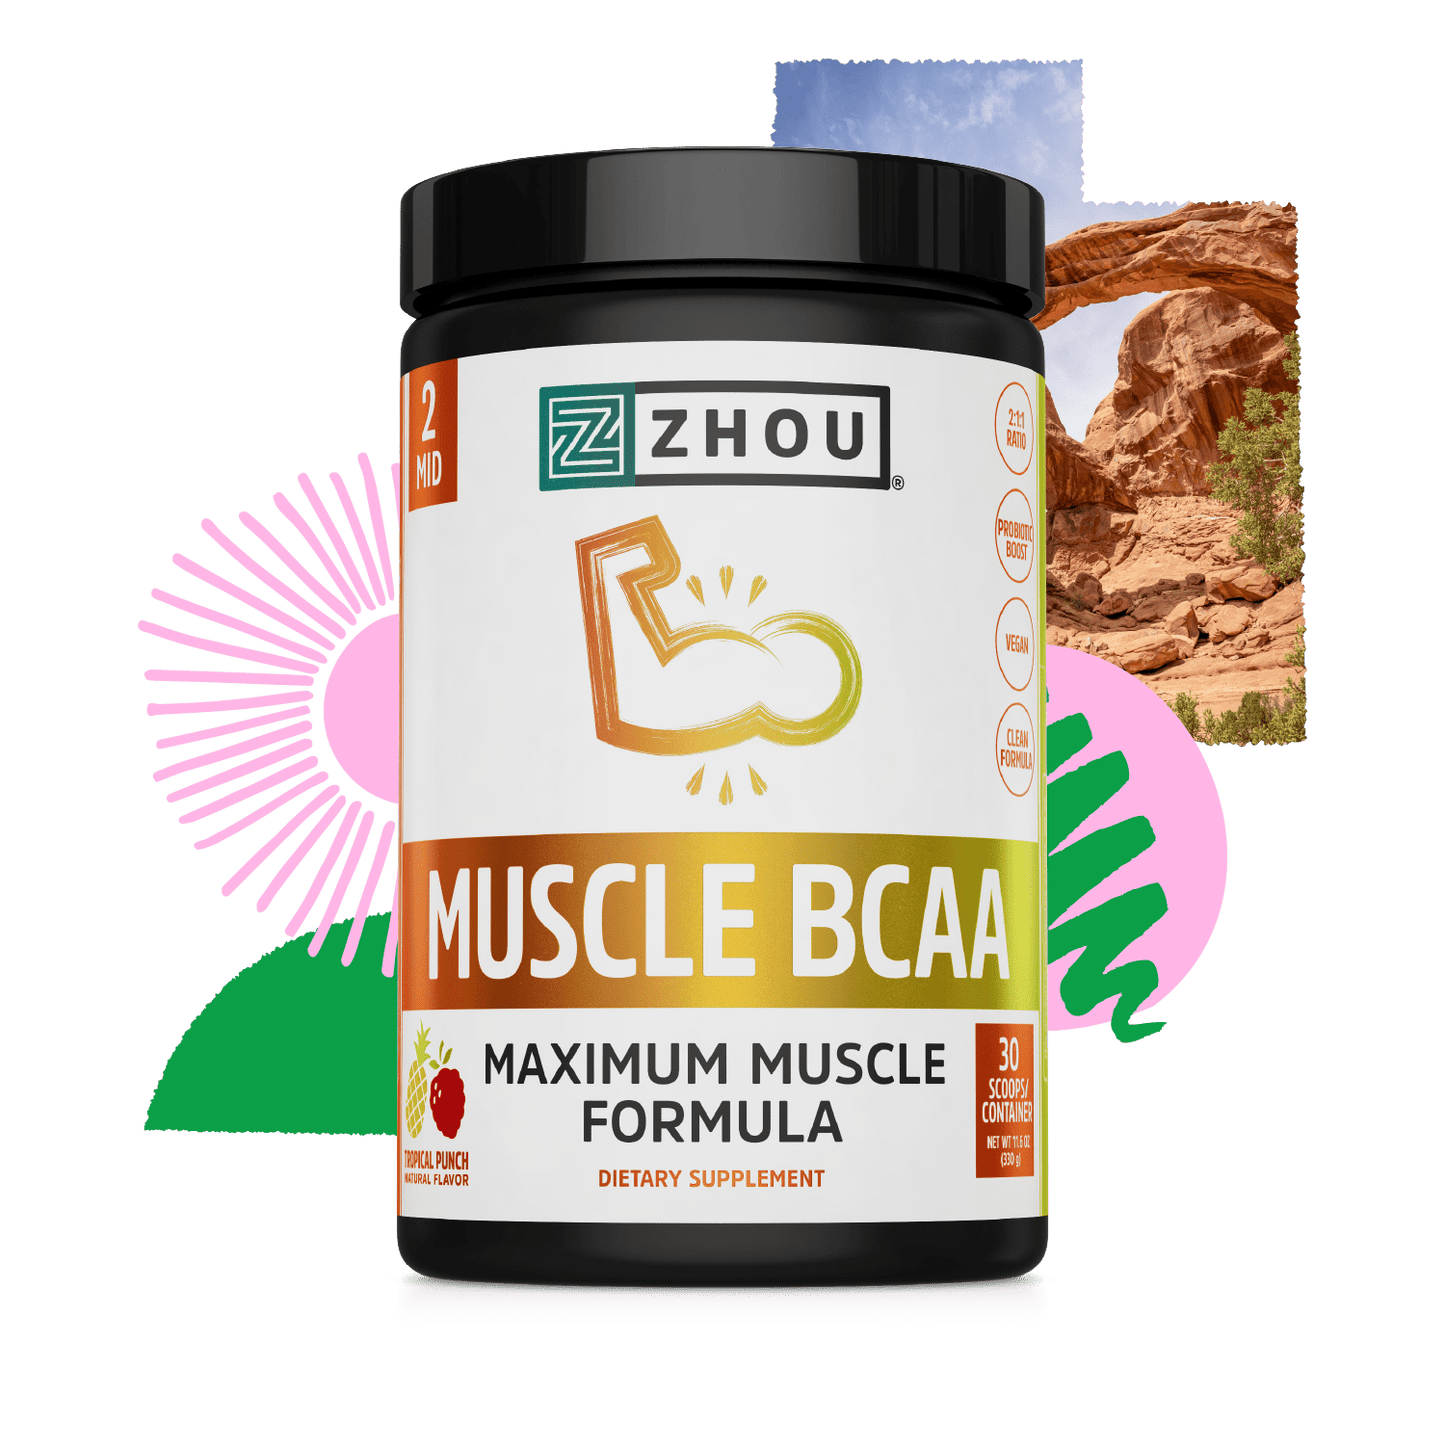 Muscle BCAA